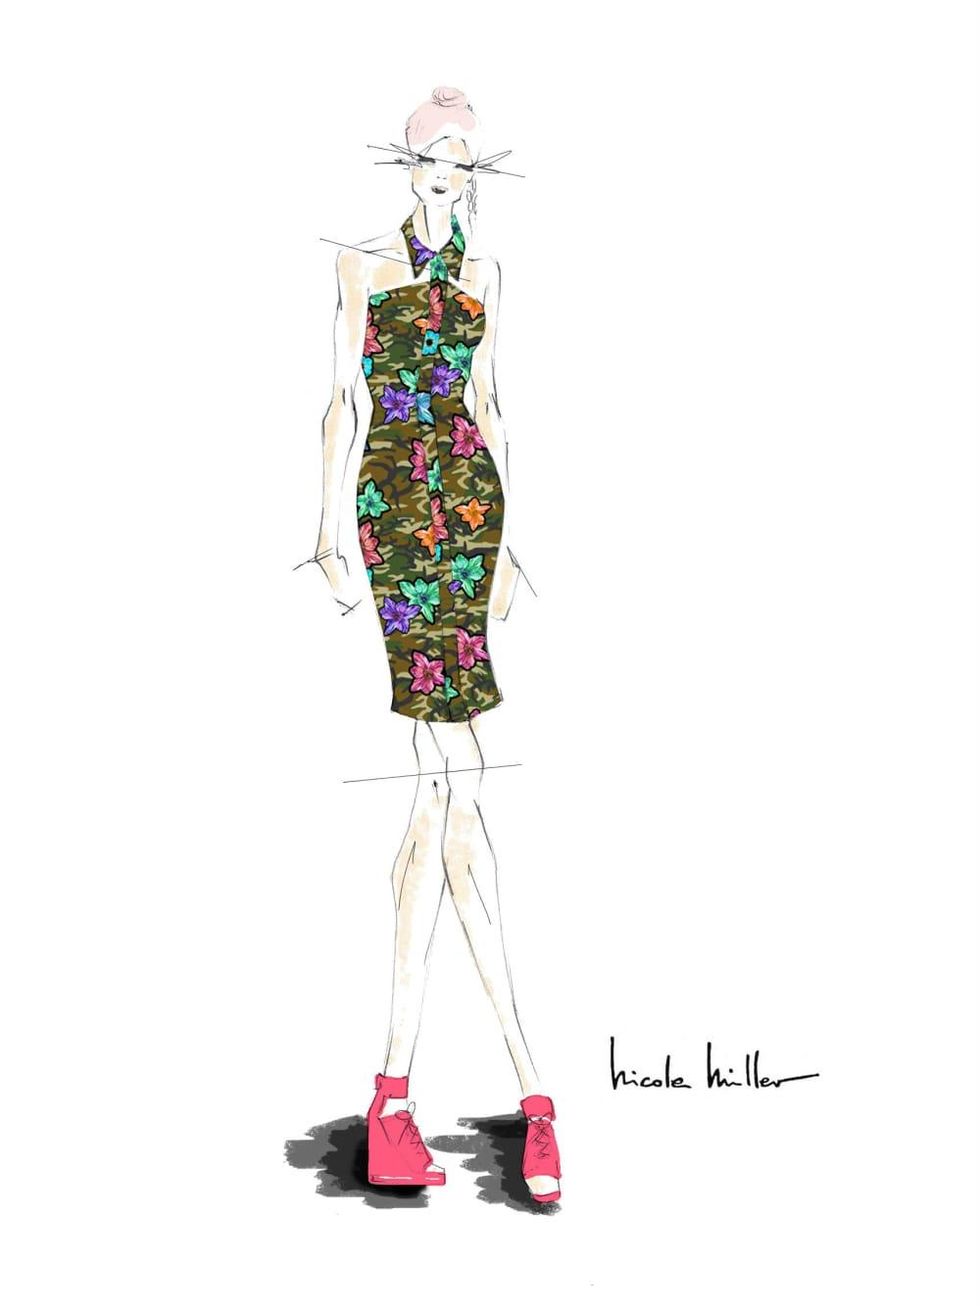 Nicole Miller inspiration sketch New York Fashion Week spring 2015